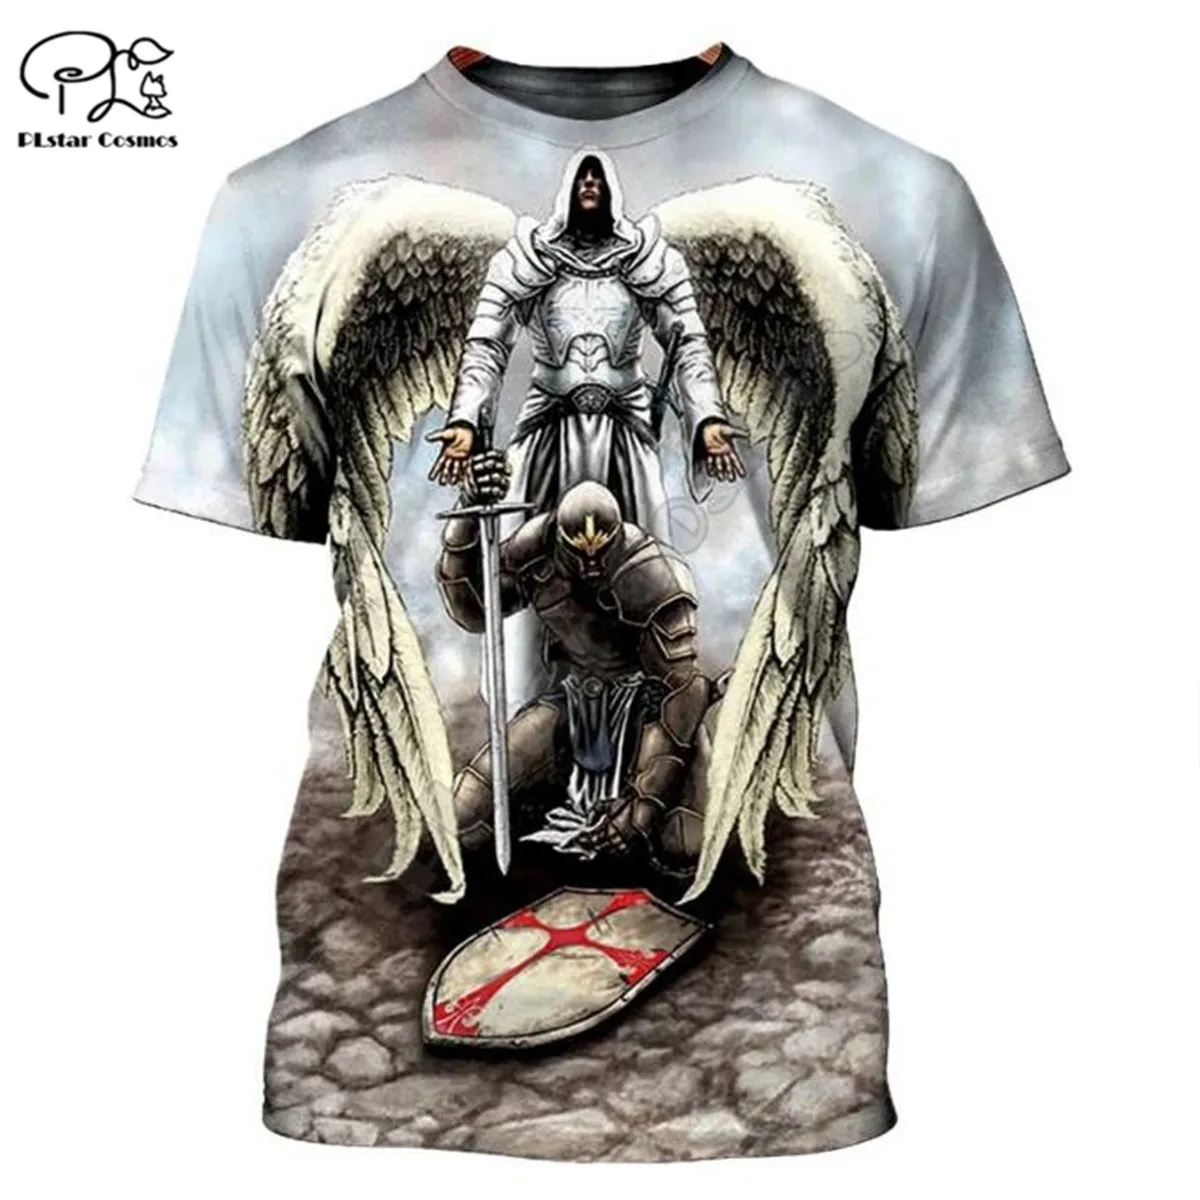 

PLstar Cosmos Knights Templar 3D Printed t shirts men for women Casual Short sleeve summer streetwear tshirt drop shipping